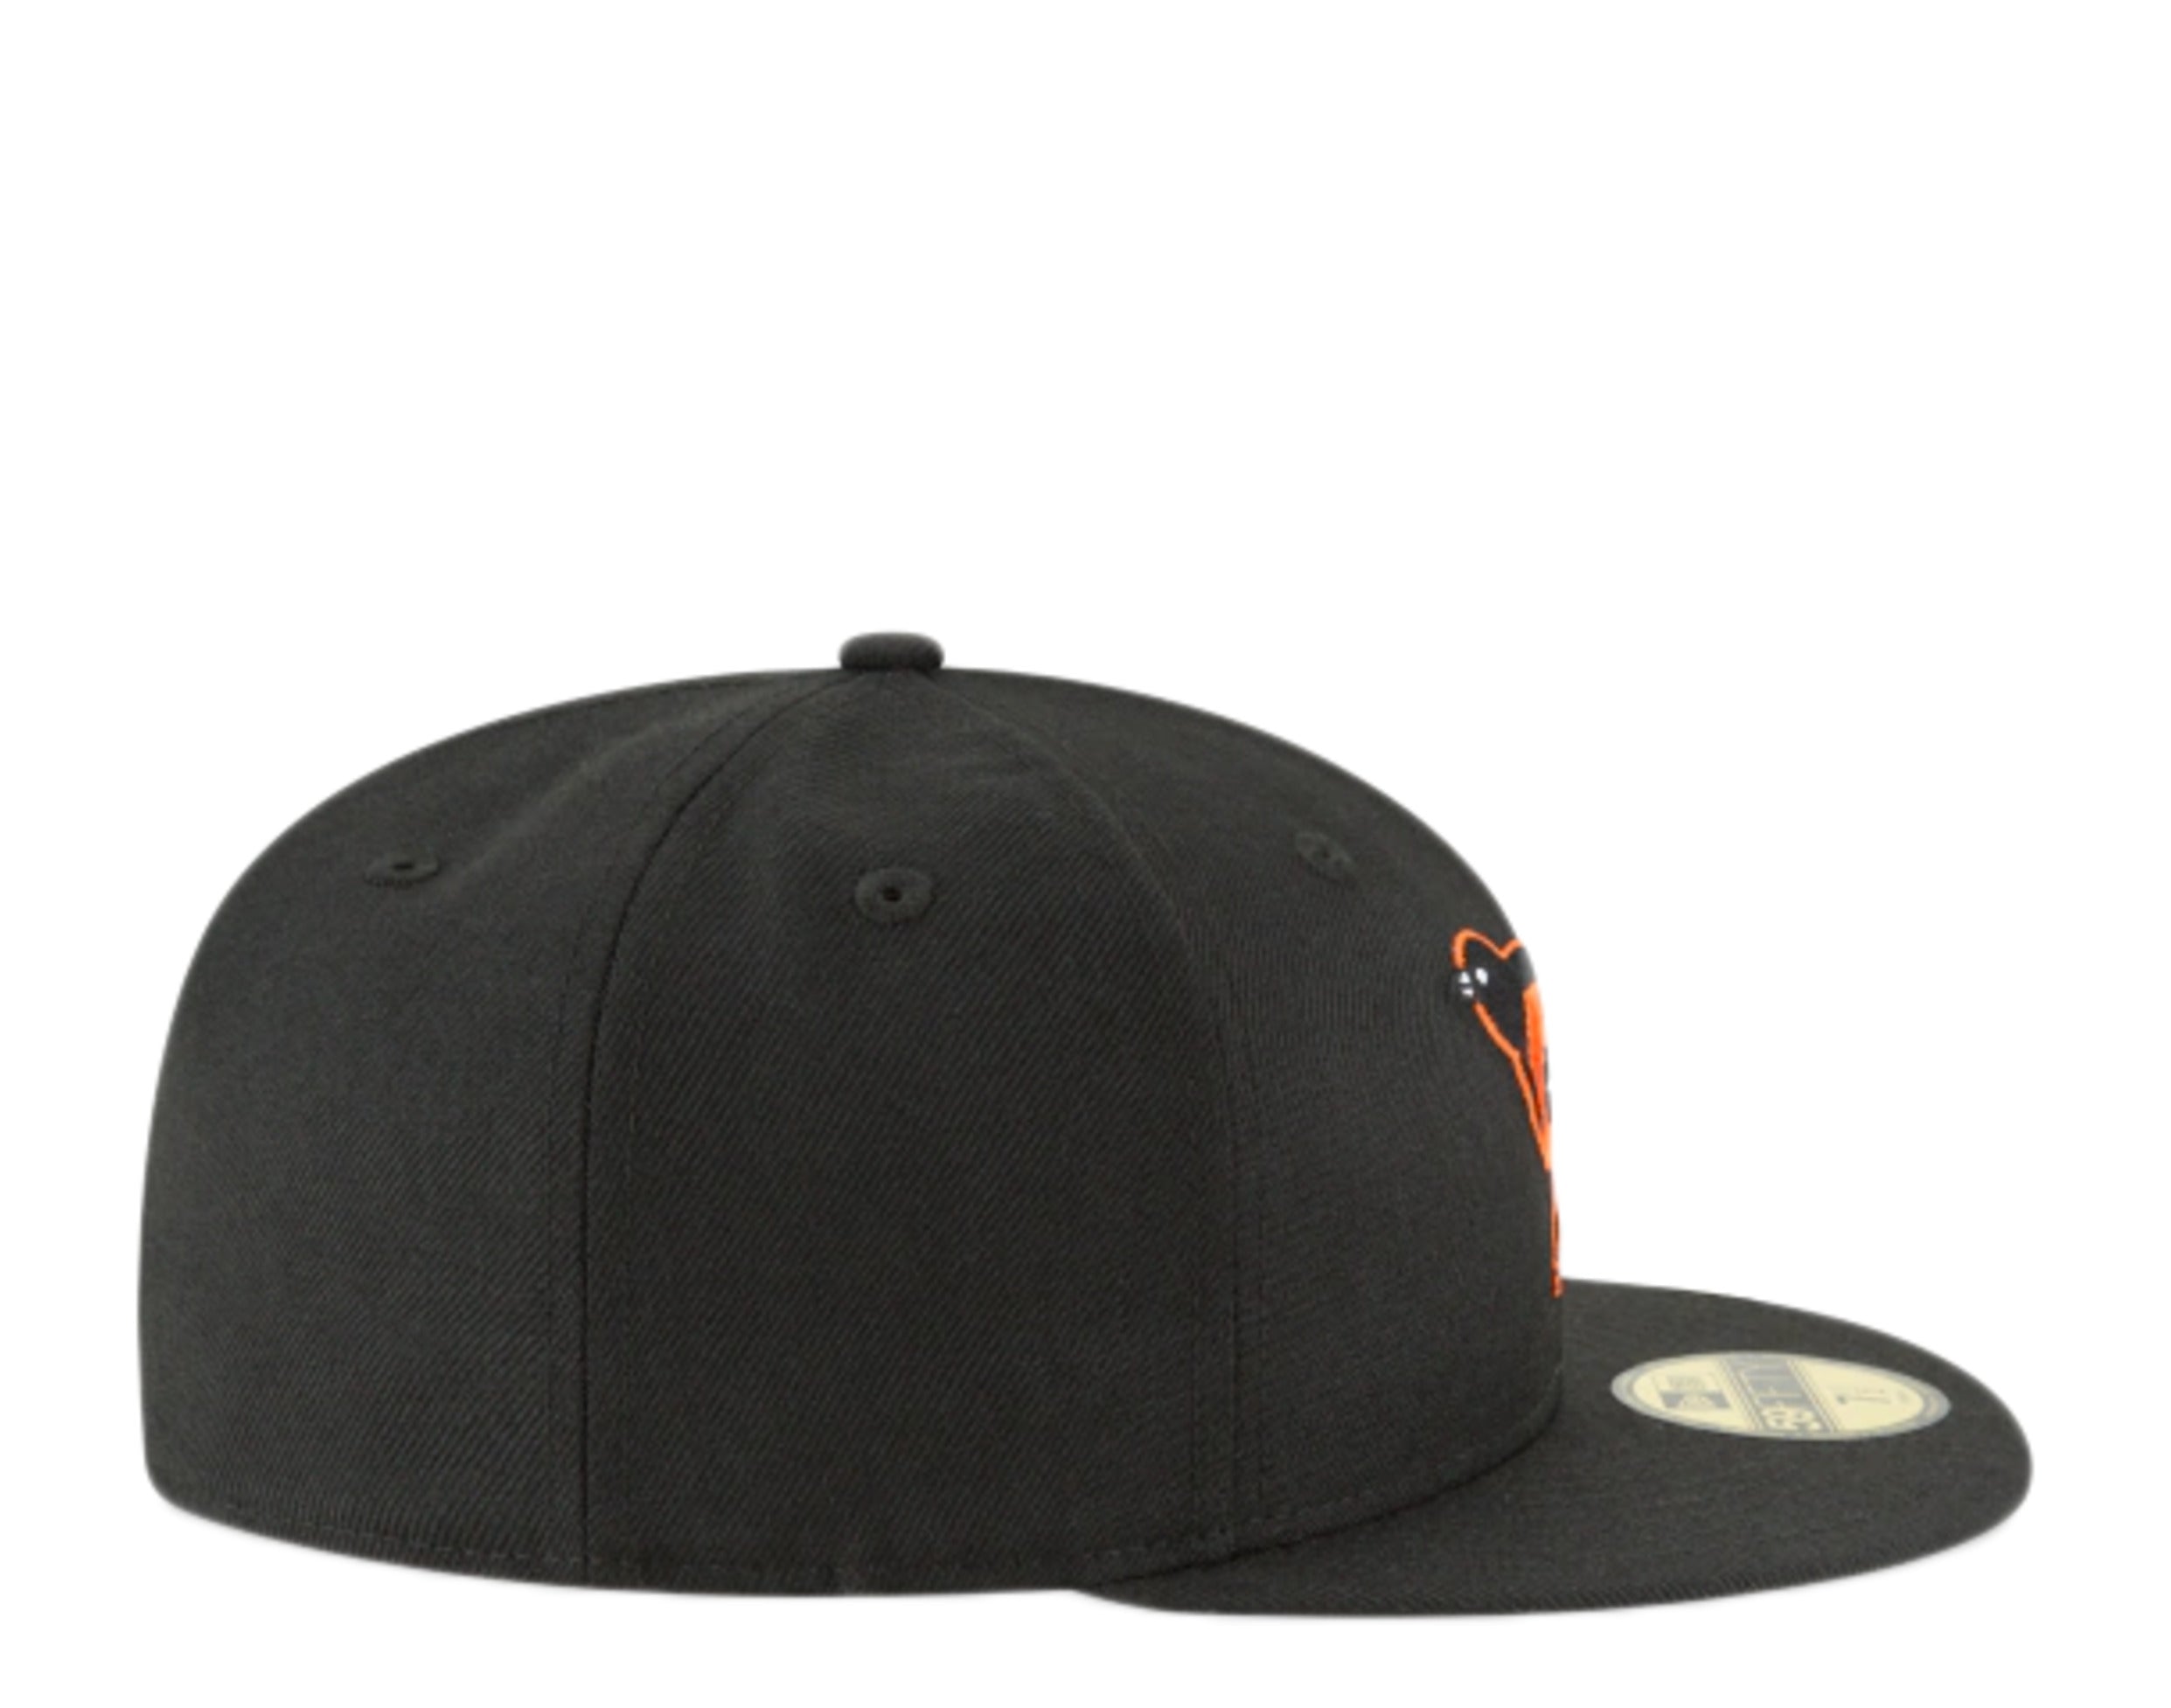 Orioles Spring Training 7 3/4 New Era Hat